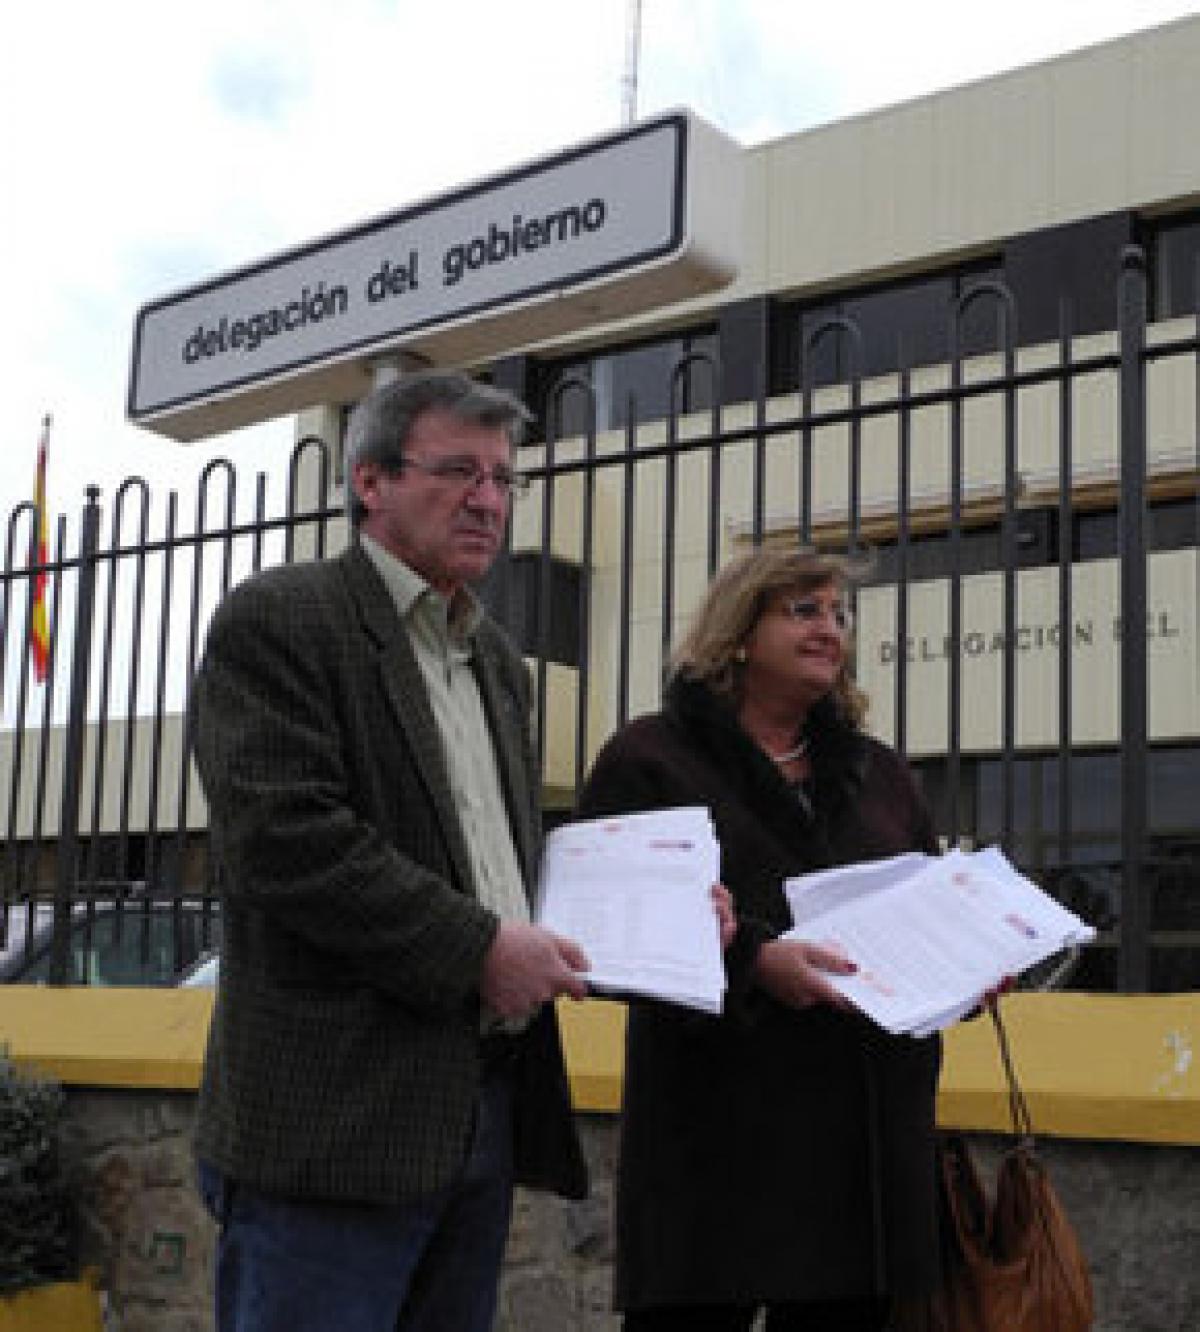 C. Navarro y Alonso Daz oficializaron ayer la convocatoria de la huelga 29M